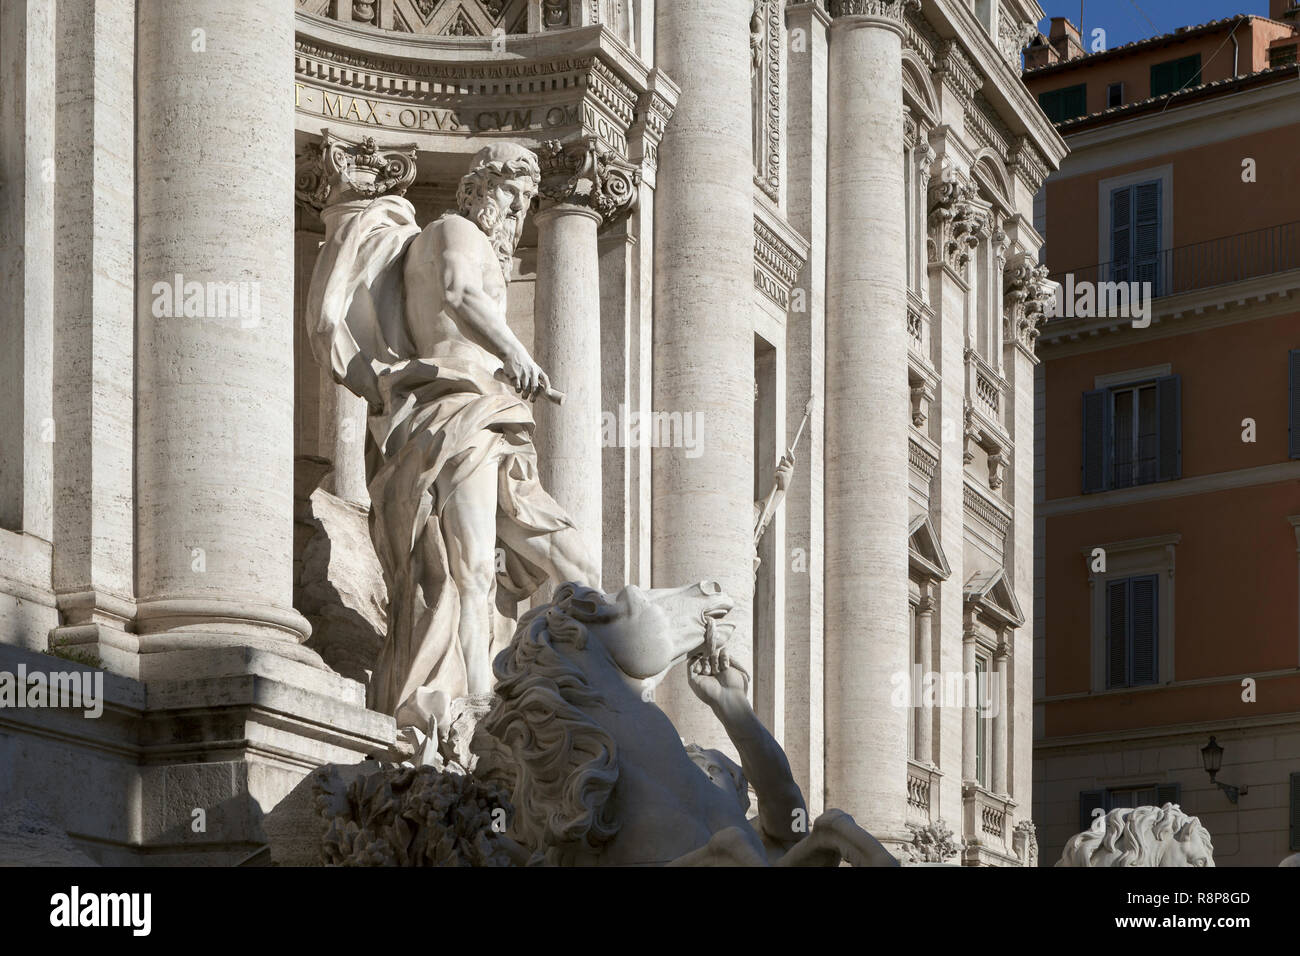 The Trevi Fountain, Fontana di Trevi, detail, Rome, Italy Stock Photo